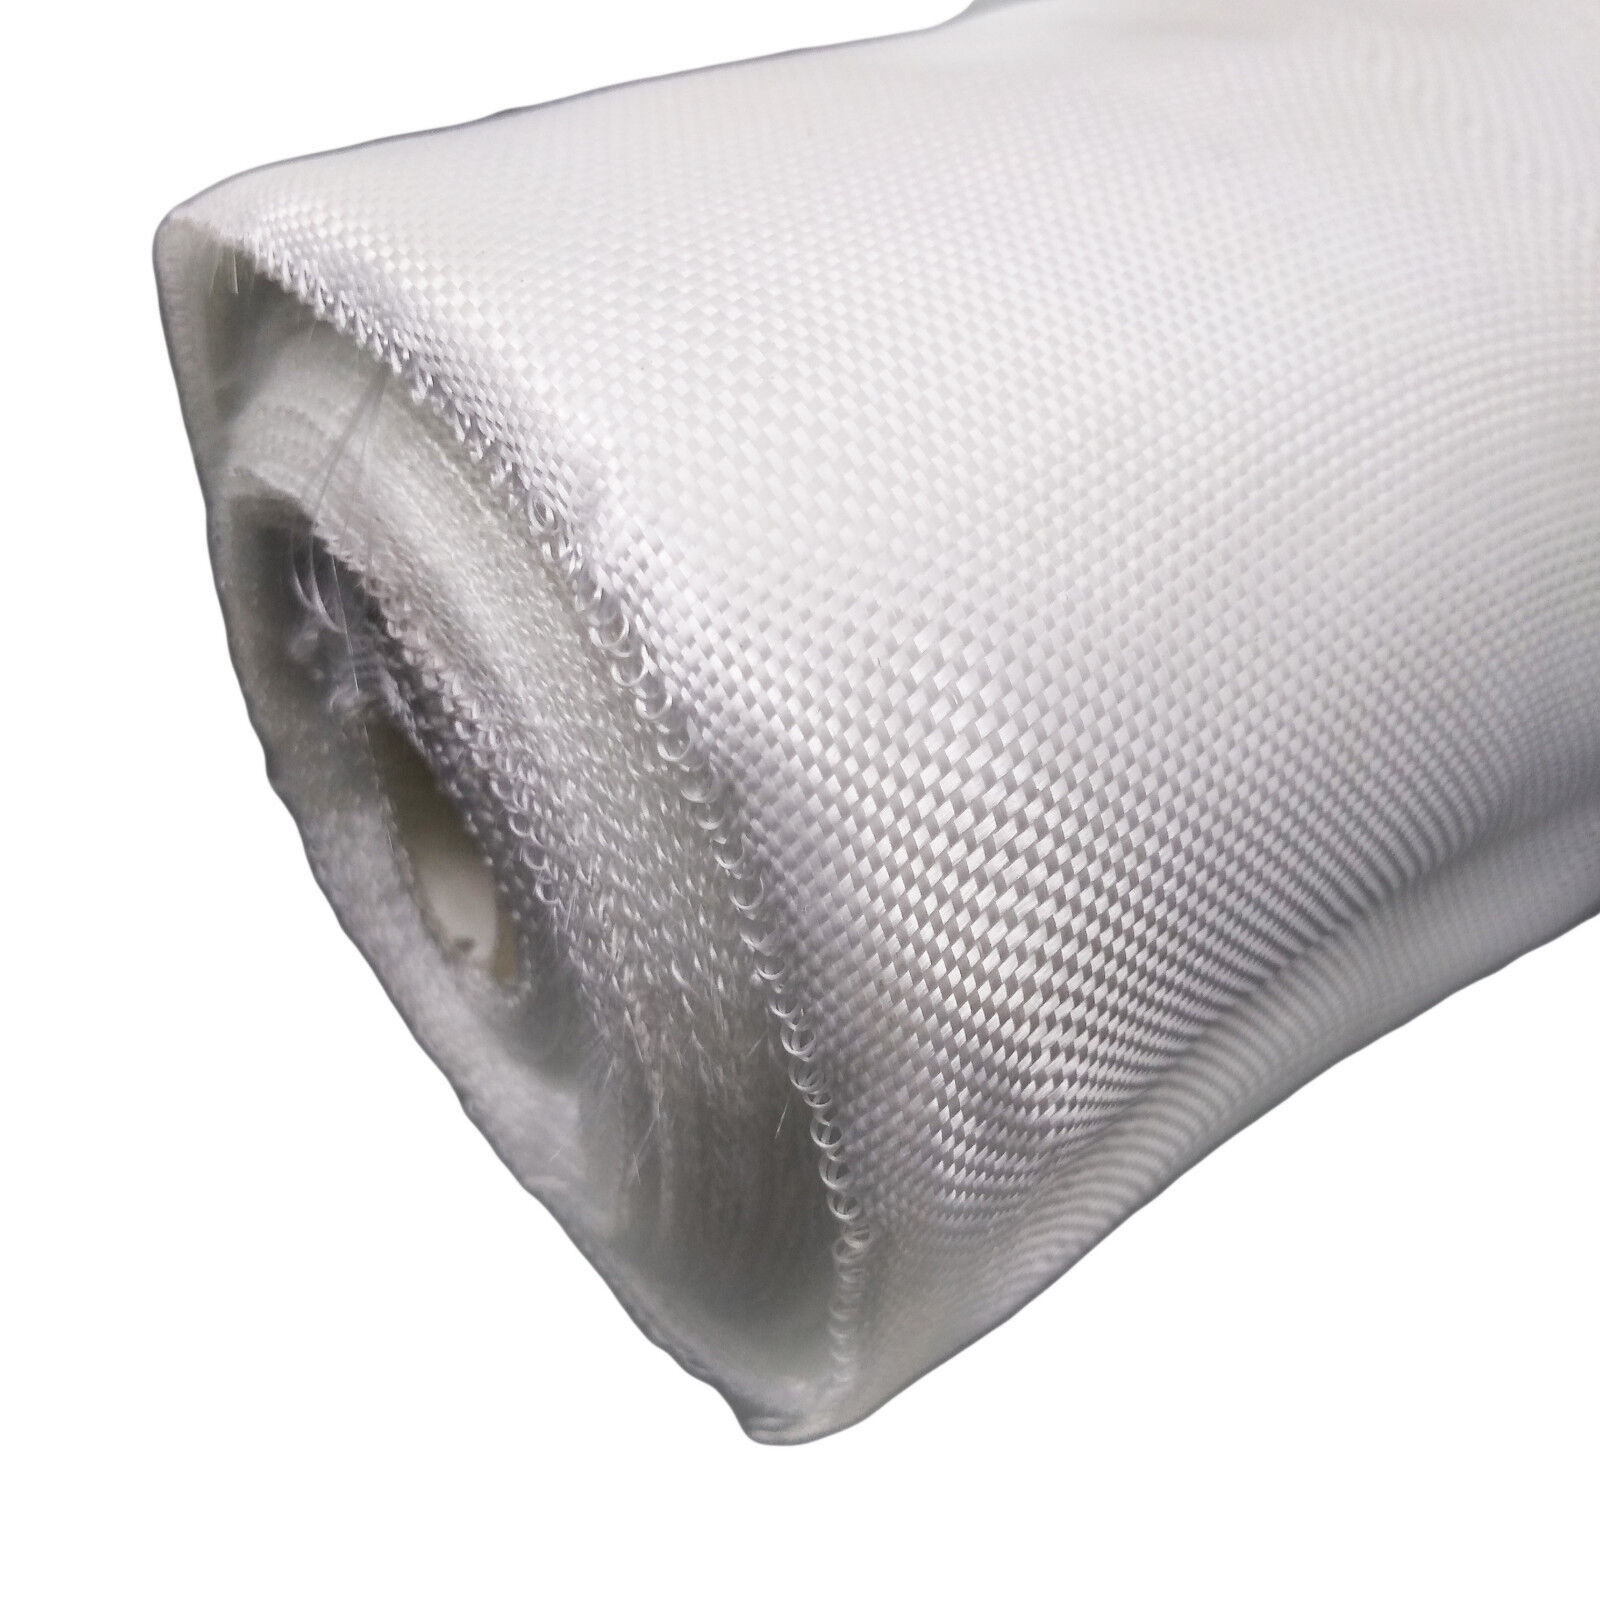 US Stock Fiber Glass Fabric Fiberglass Cloth Width 4 inch Length 98 feet Unbranded Does not apply